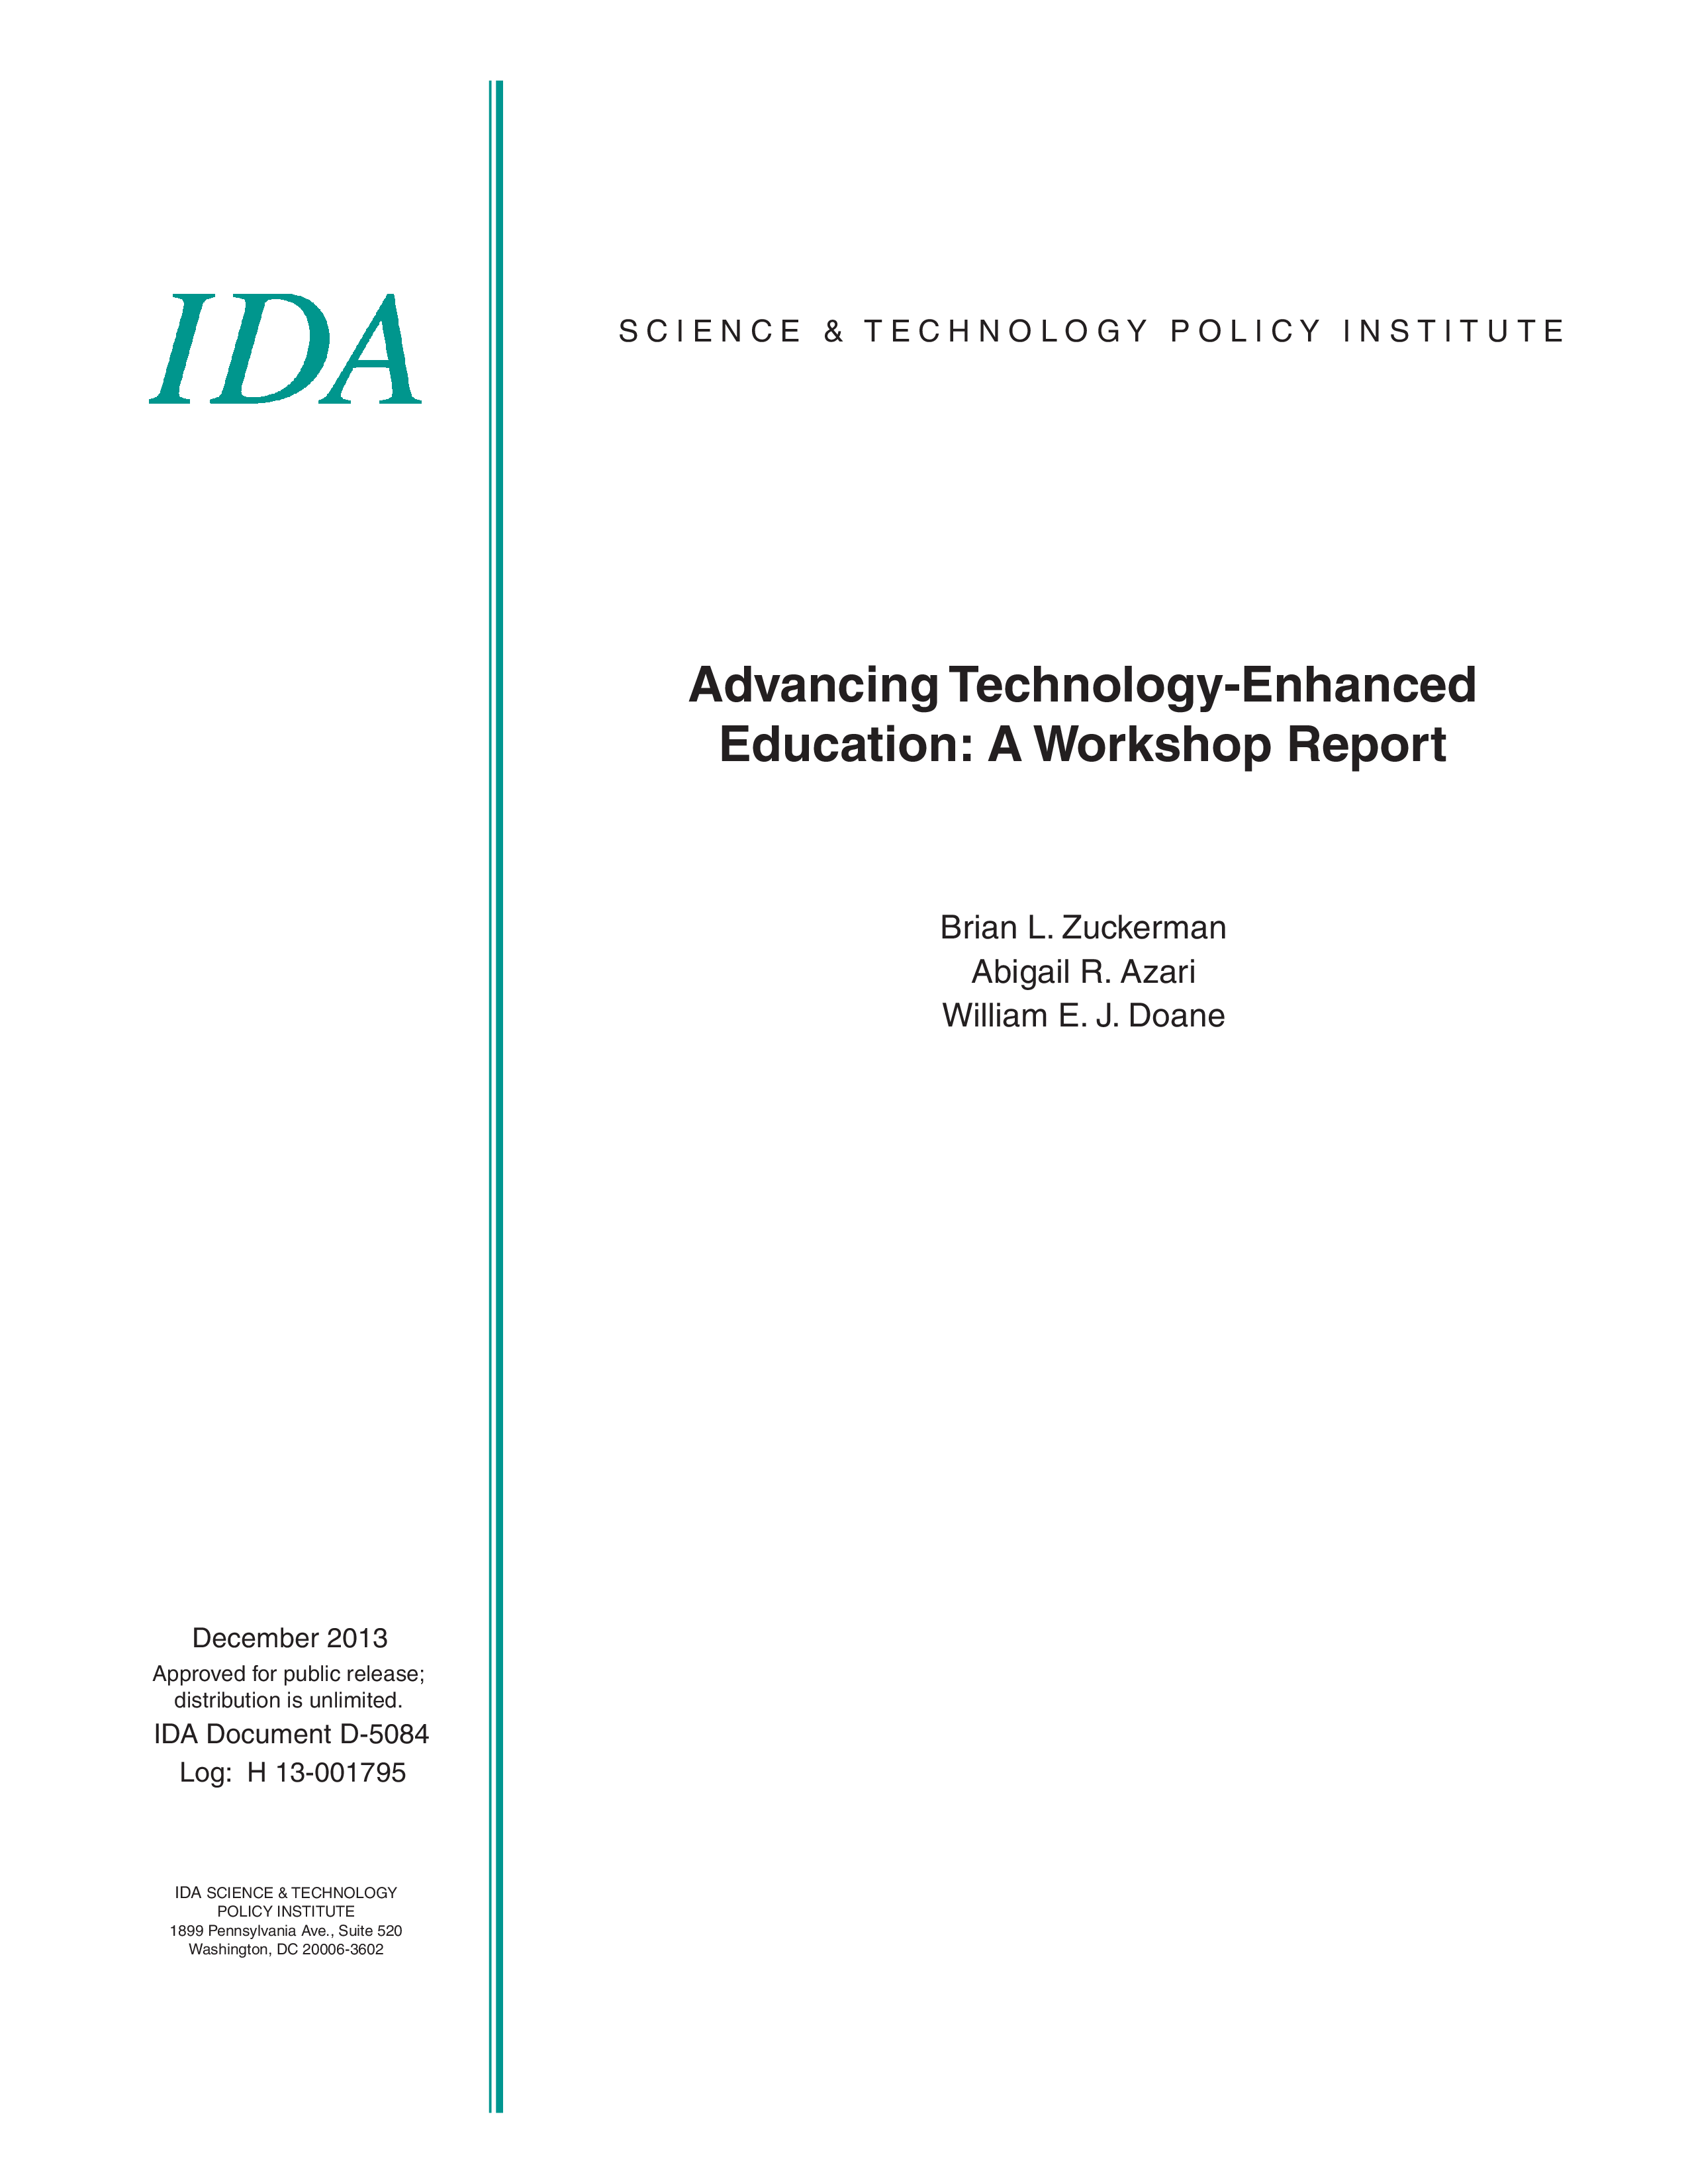 Advancing Technology-Enhanced Education A Workshop Report